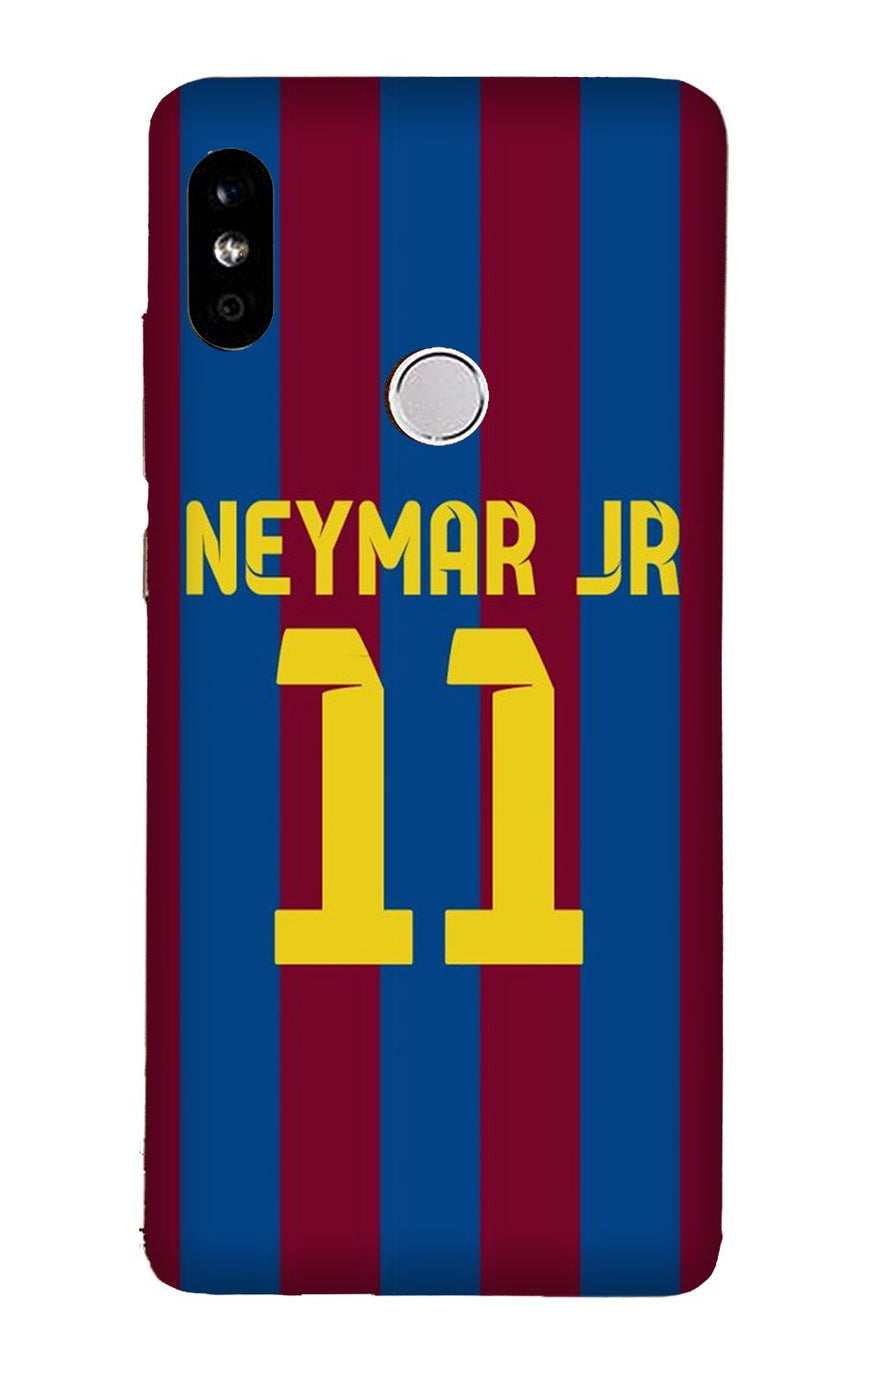 Neymar Jr Case for Xiaomi Redmi 7  (Design - 162)